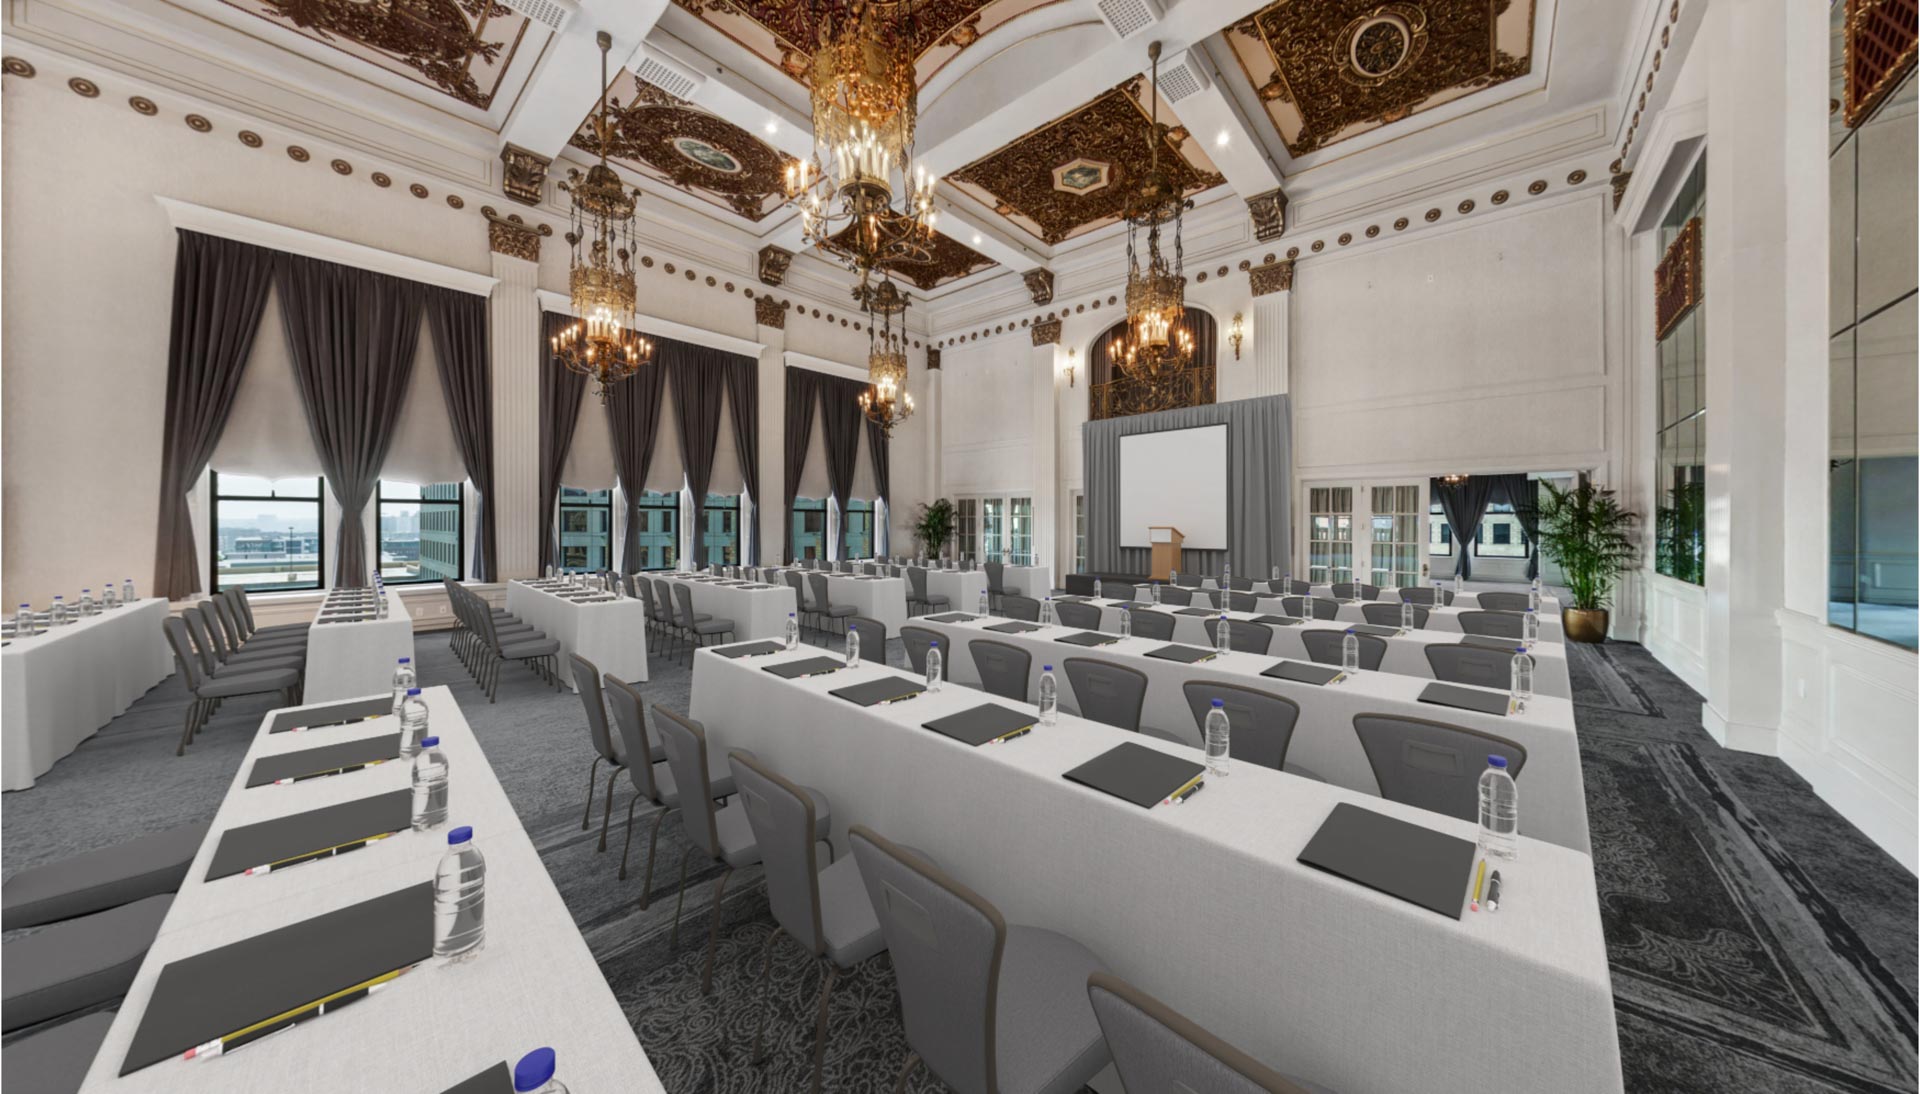 The Pfister Hotel Imperial Ballroom Classroom Set